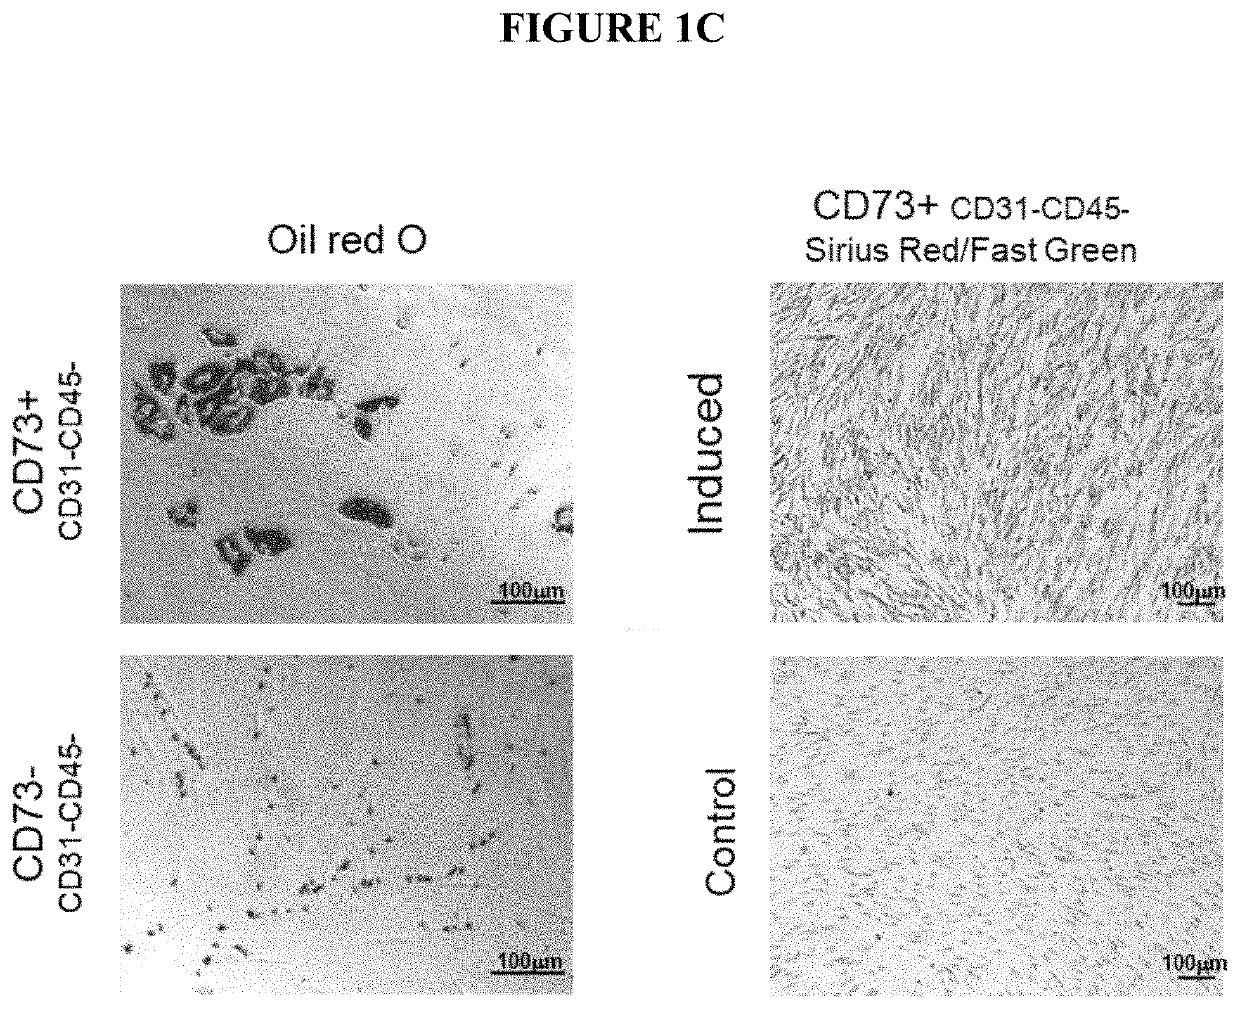 Methods for producing fibroadipogenic progenitor cells